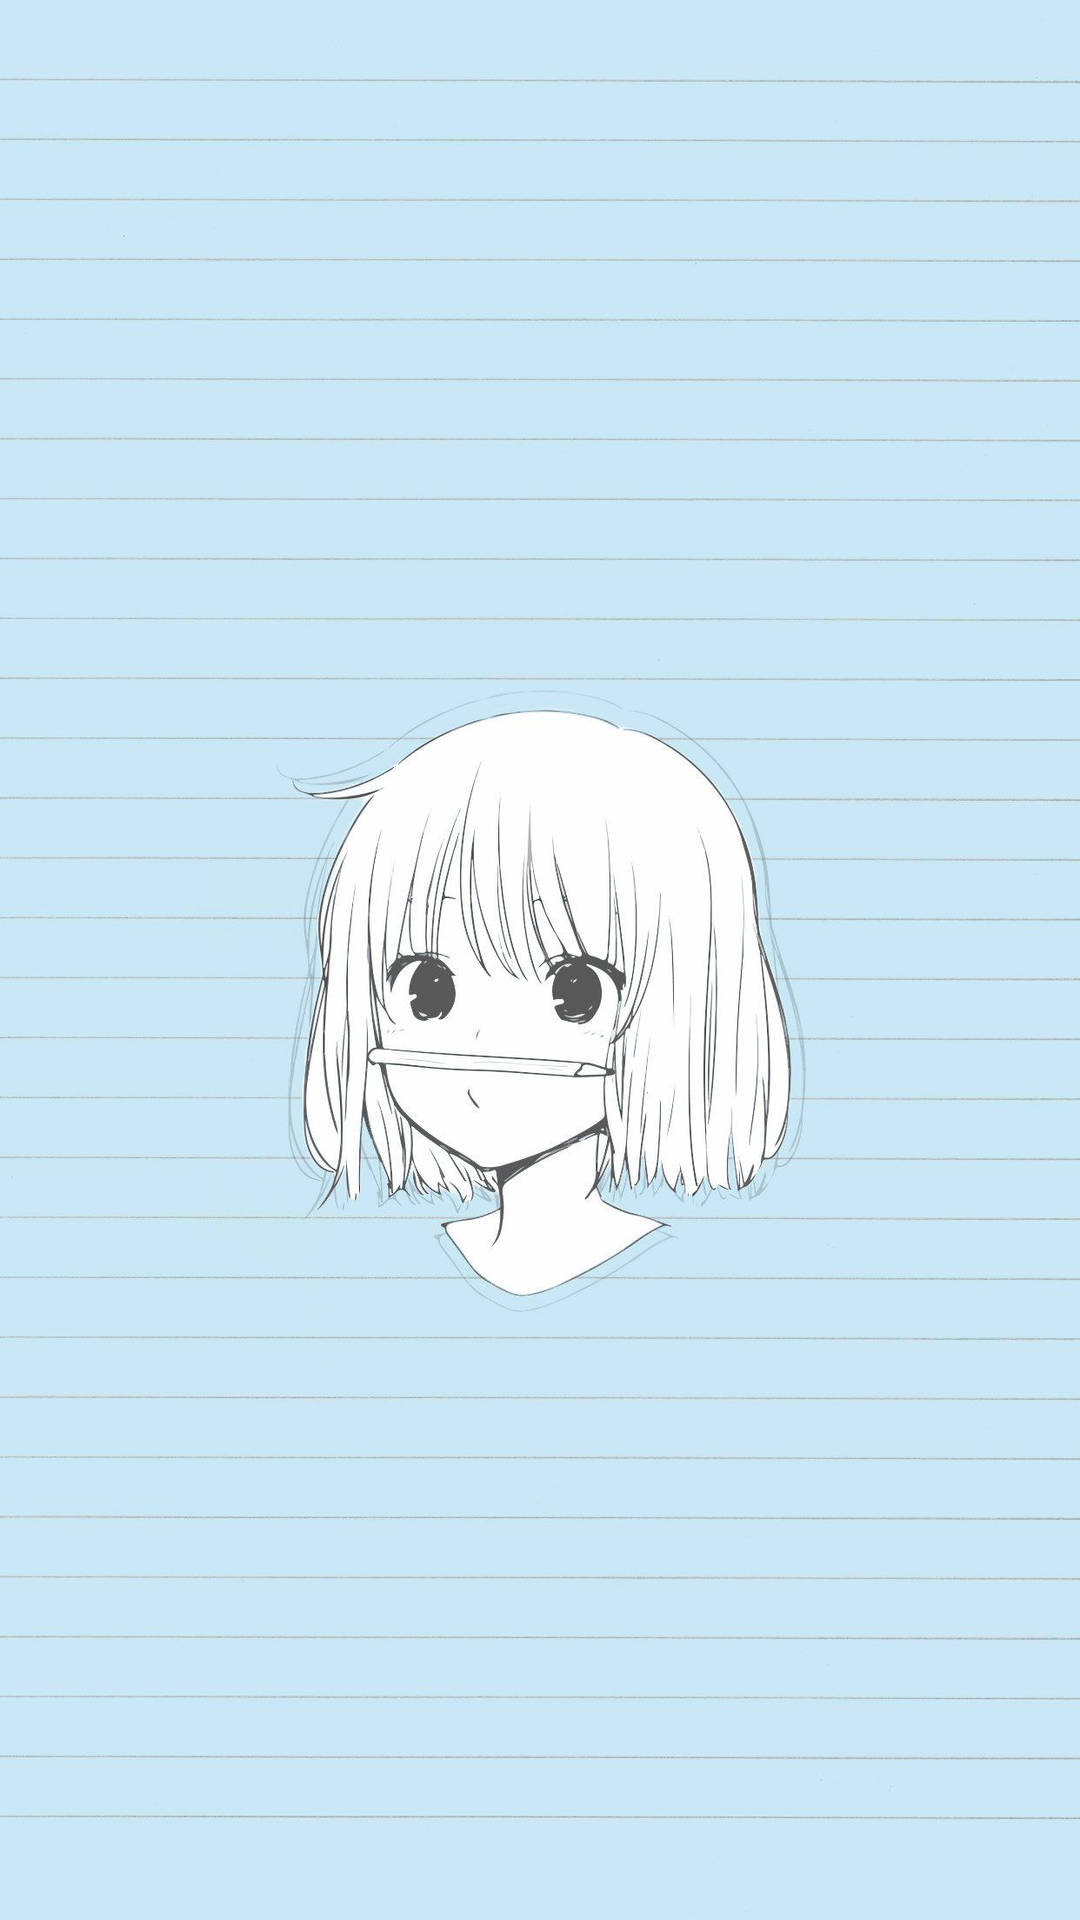 Chibi Anime Sketch added a new photo. - Chibi Anime Sketch